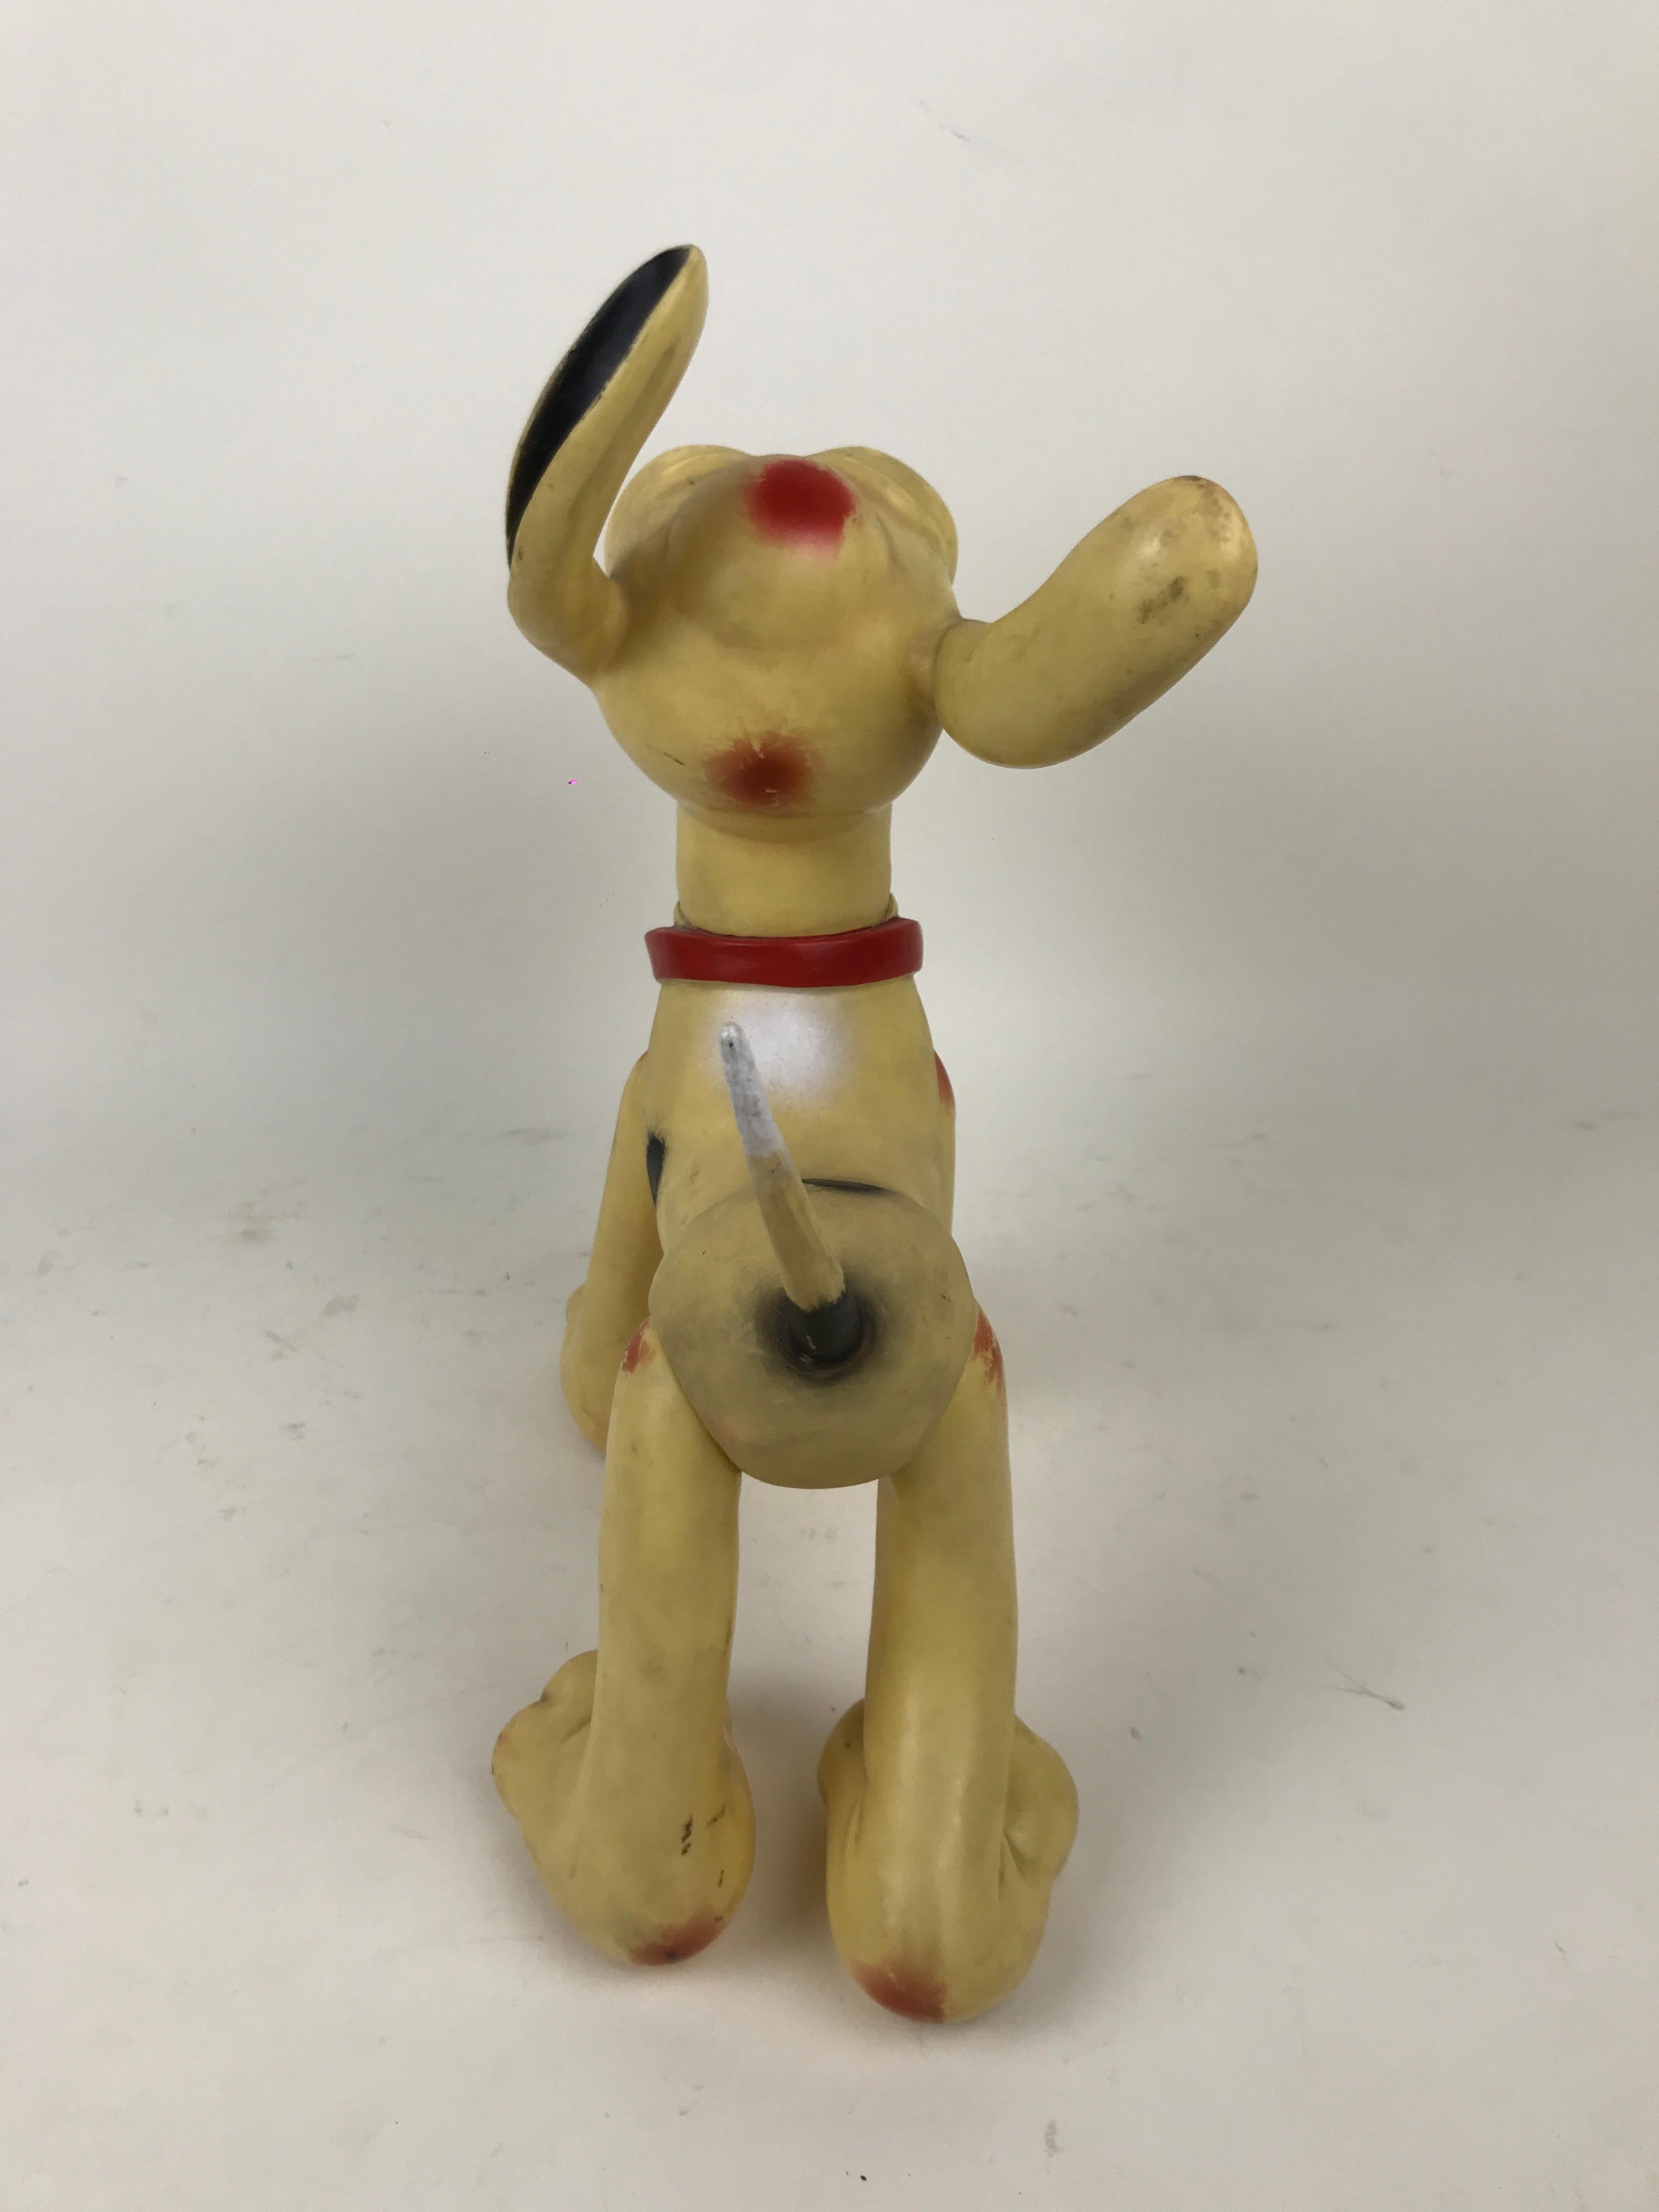 Italian 1960s Vintage Original Disney Pluto Rubber Squeak Toy Made in Italy